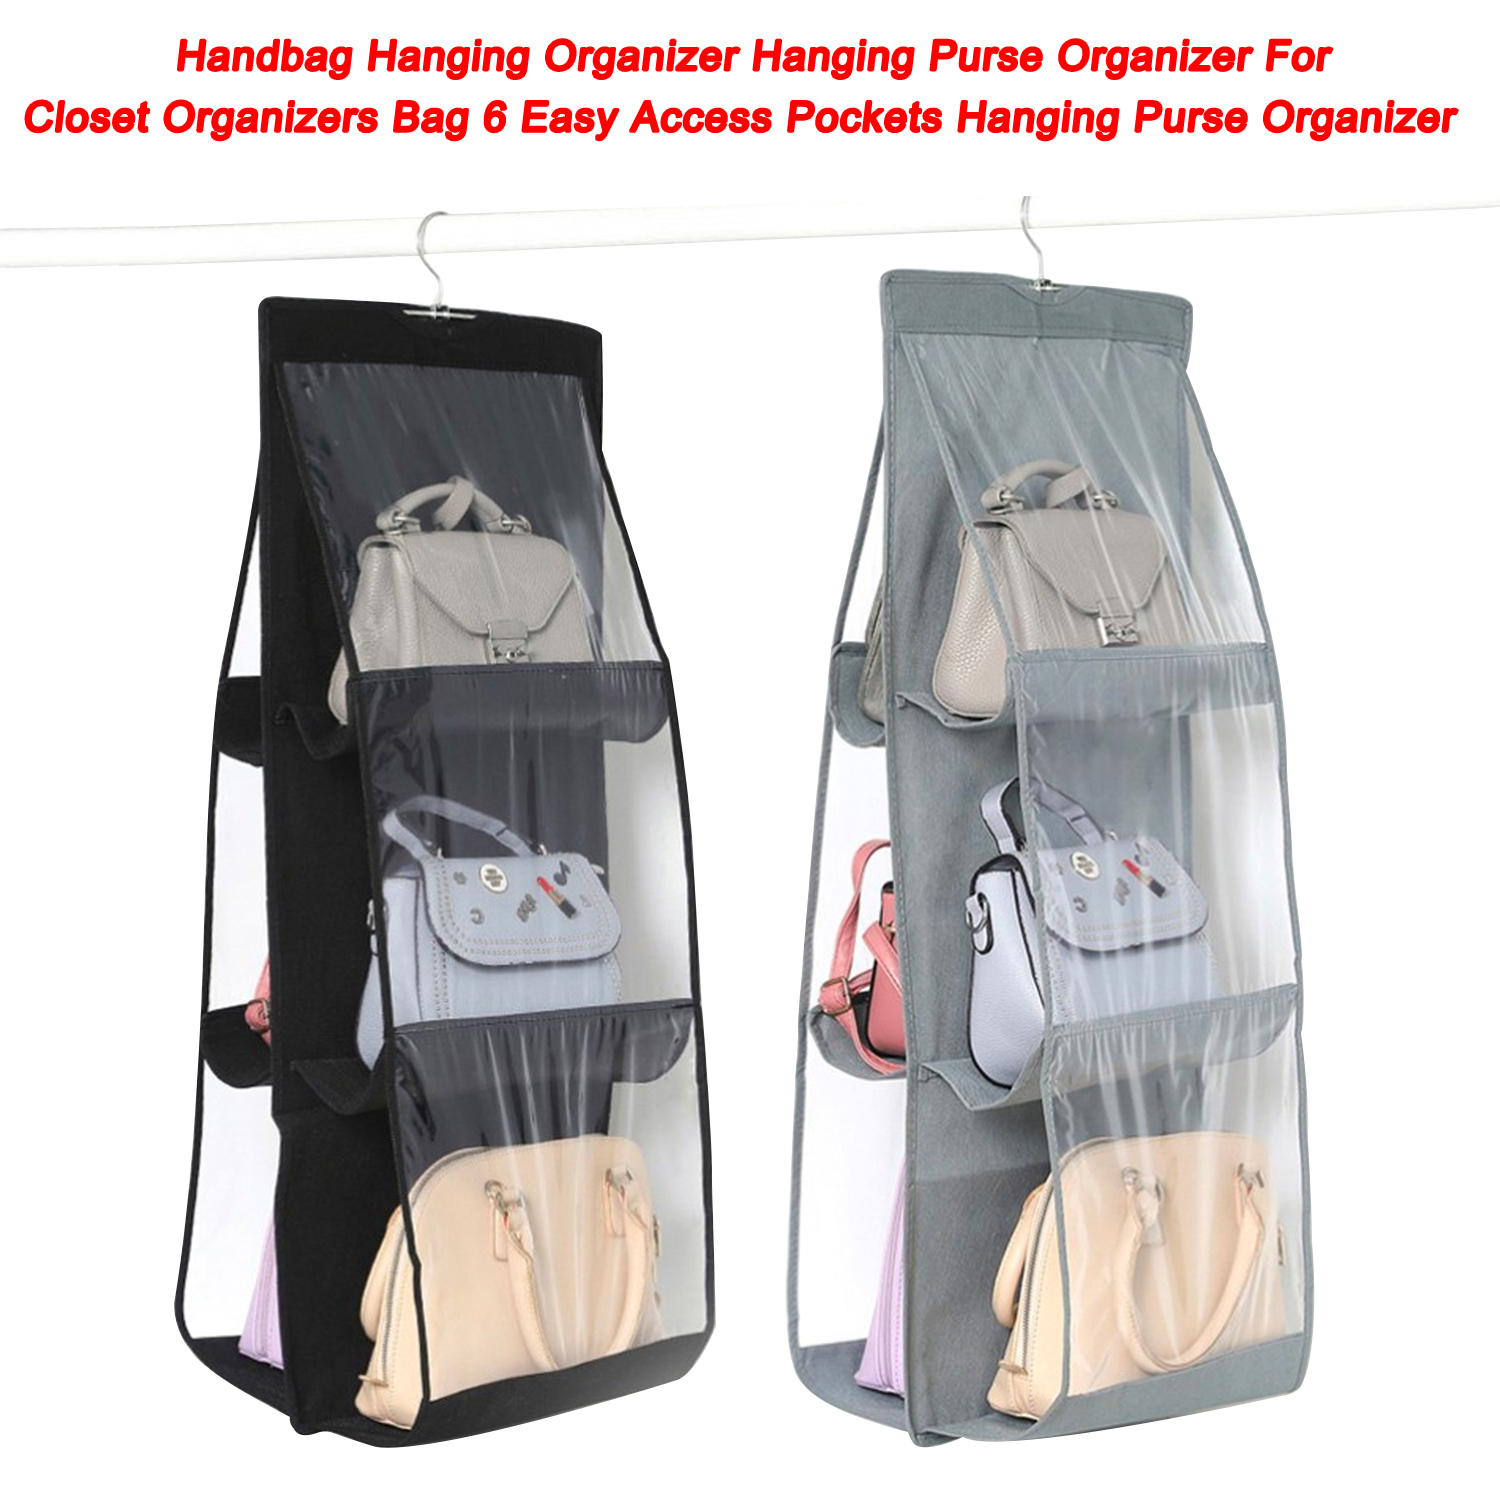 Handbag Hanging Organizer Hanging Purse Organizer For Closet Organizers Bag 6 Easy Access Pockets Hanging Purse Organizer 